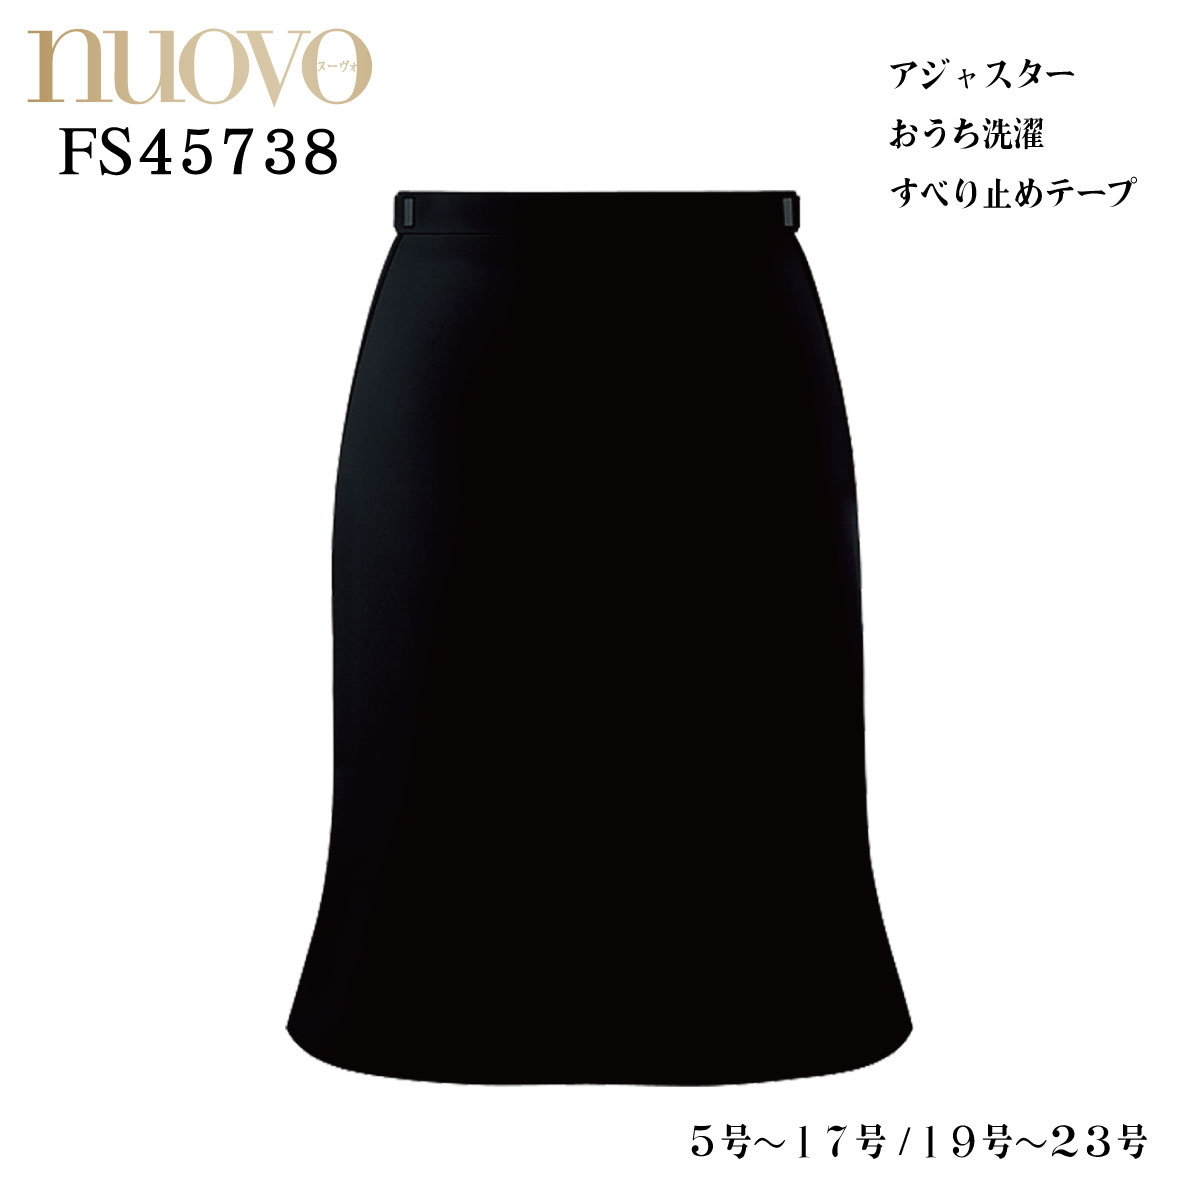 ESS840 Aラインスカート ENJOY・カーシーカシマ・KARSEE 事務服・制服 5号〜21号 ポリエステル100％